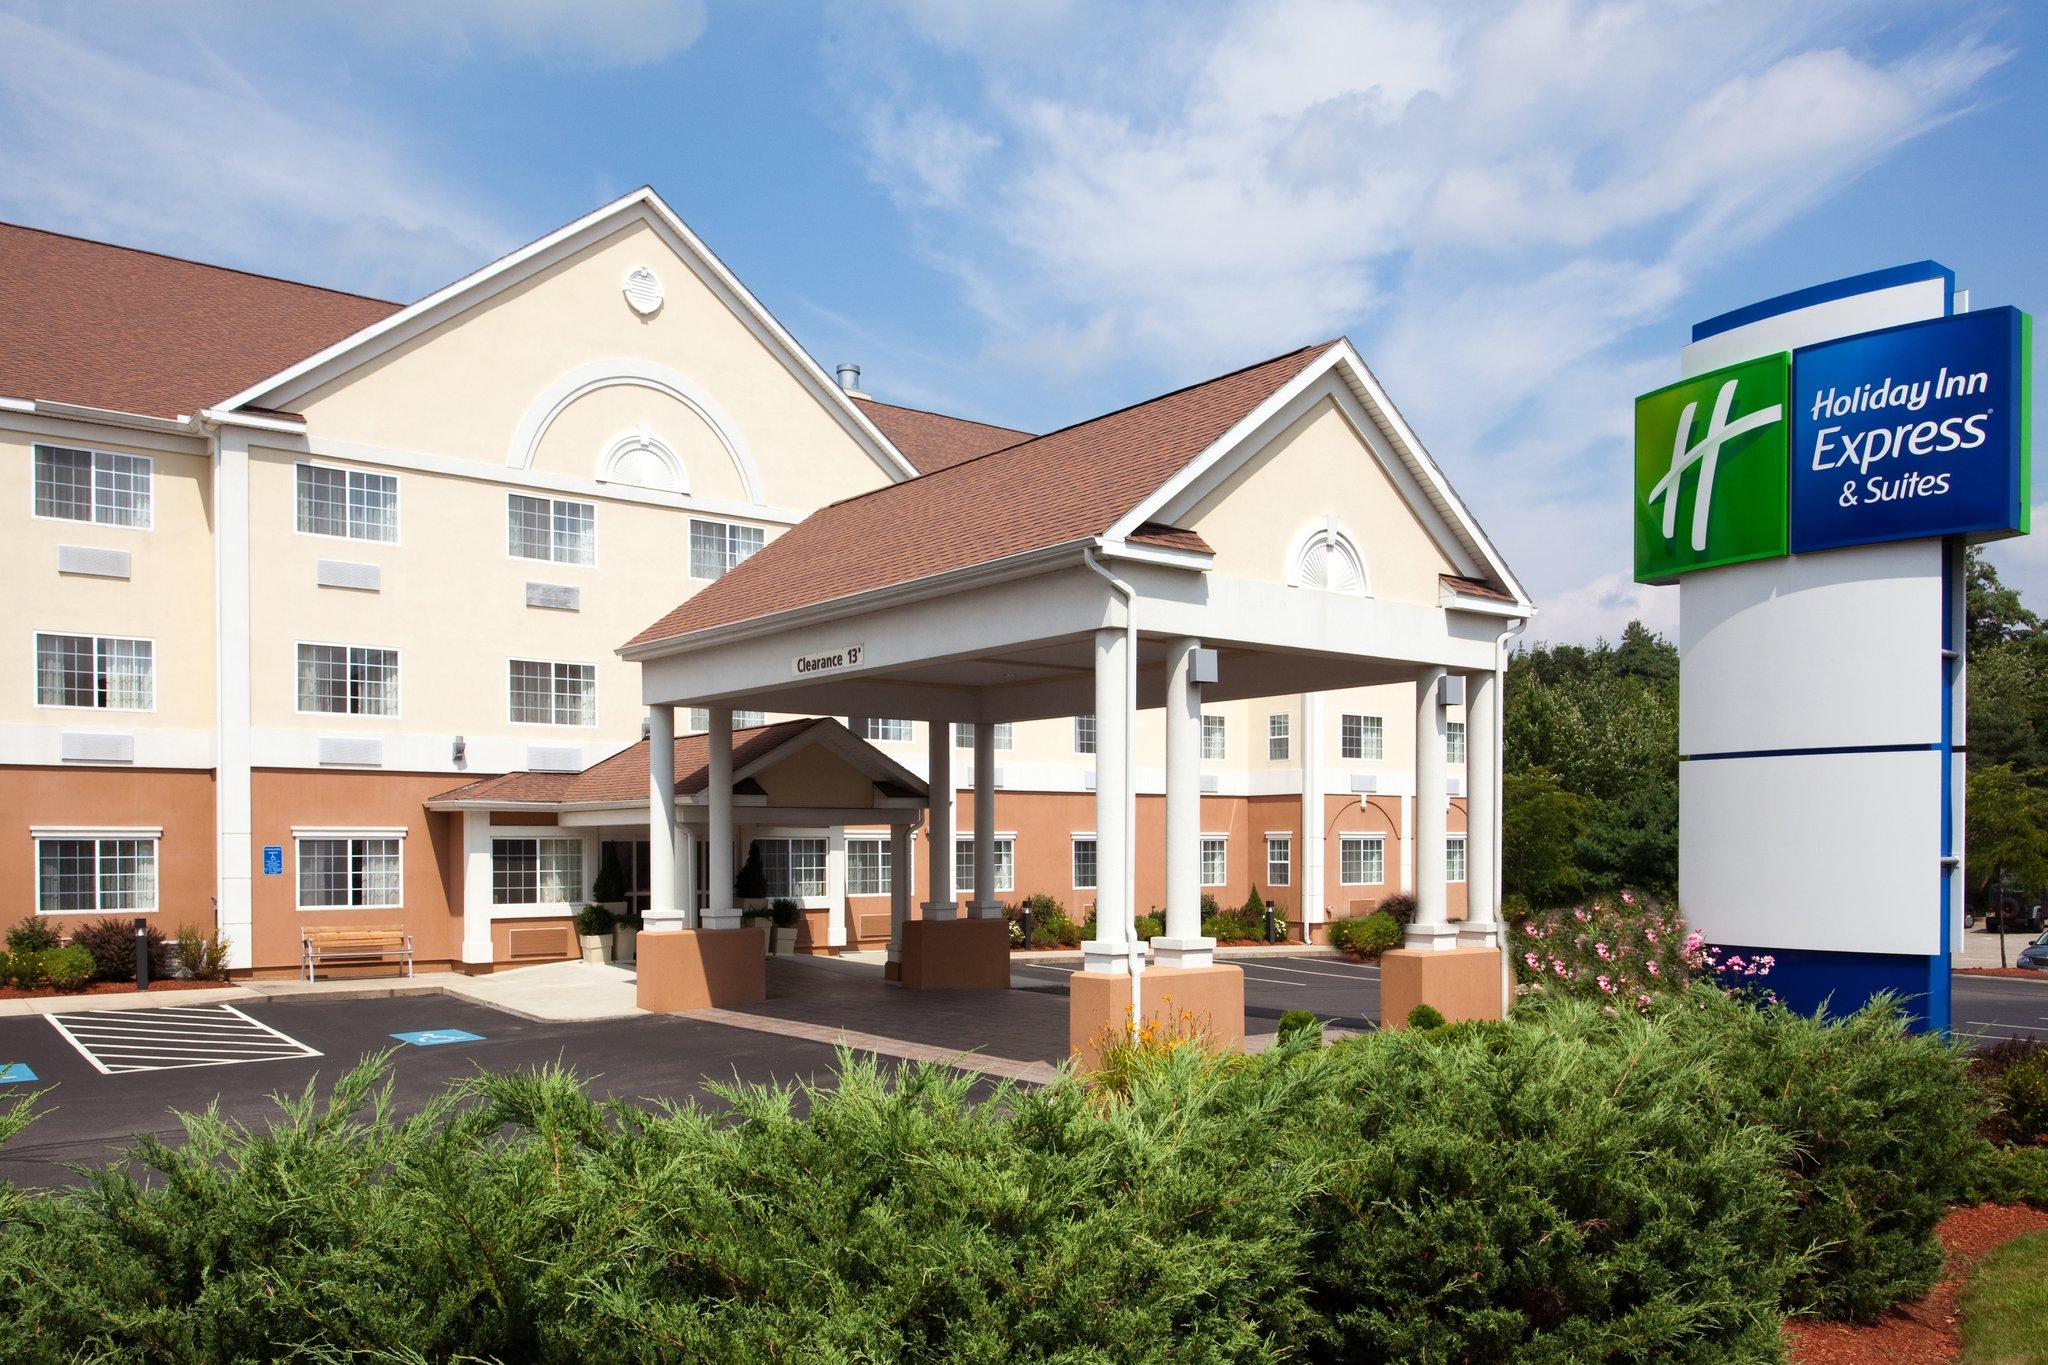 Holiday Inn Express Hotel & Suites Boston - Marlboro in Hudson, MA